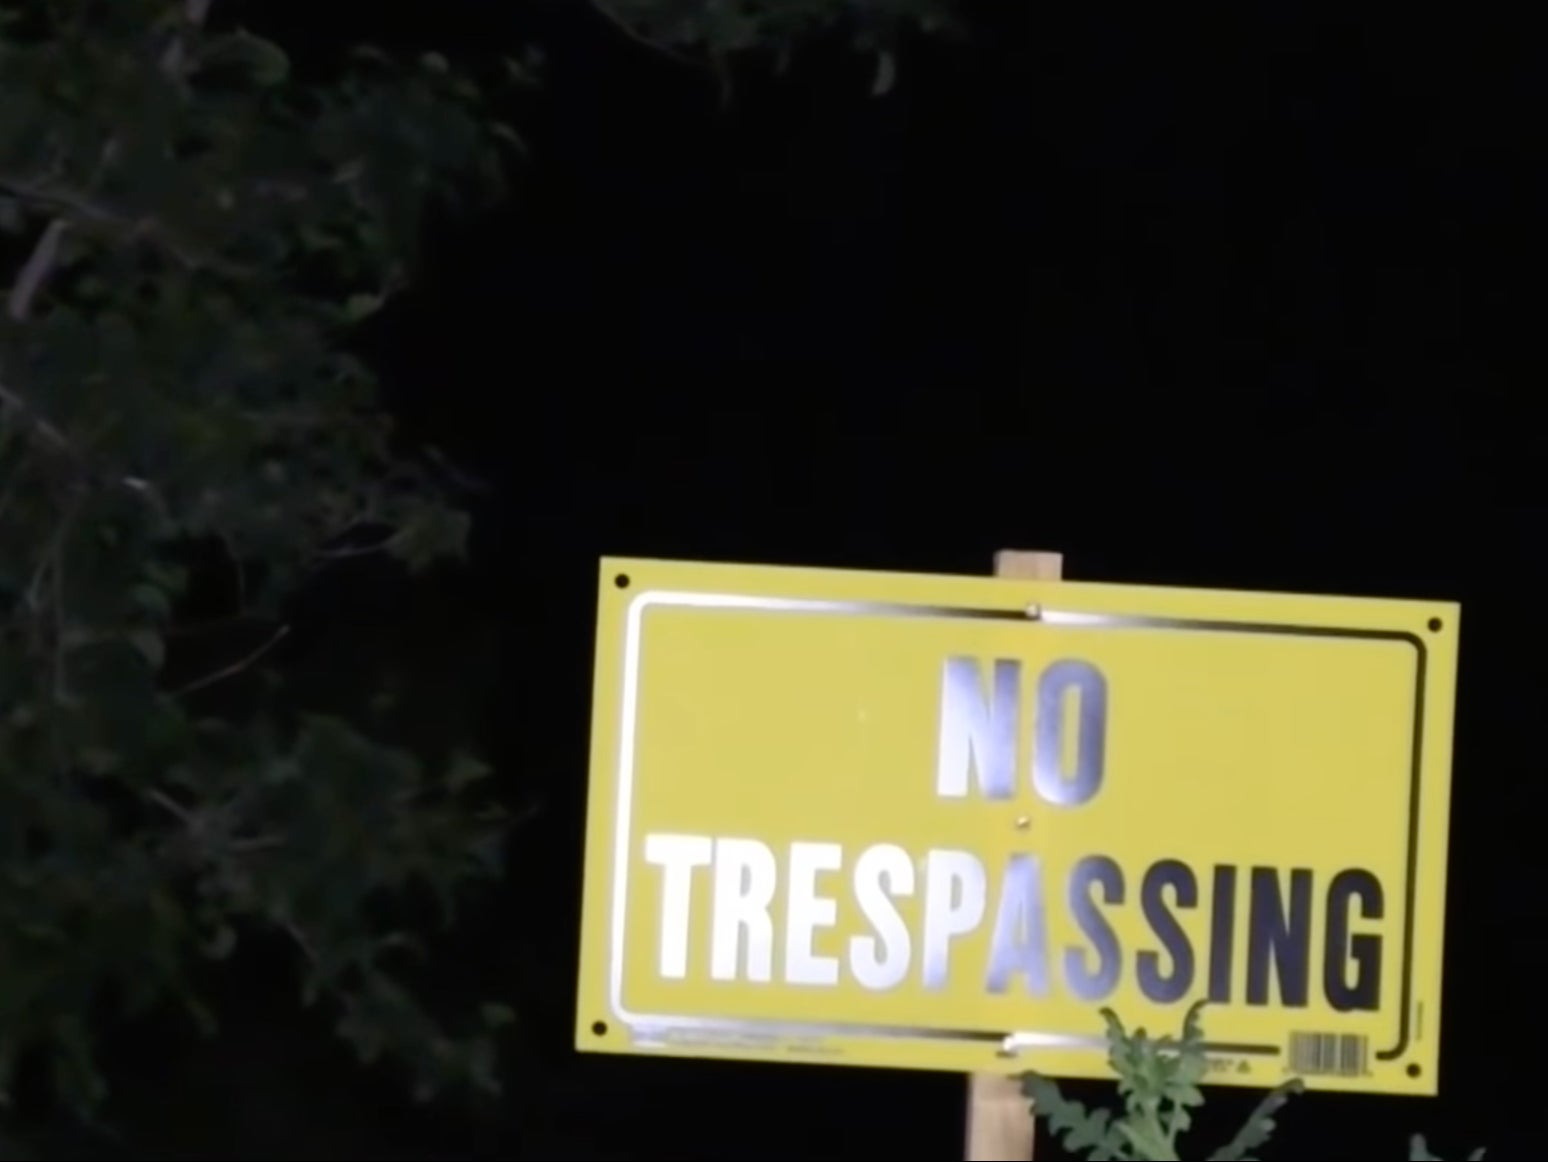 A ‘No trespassing’ sign in Lake Hughes, California